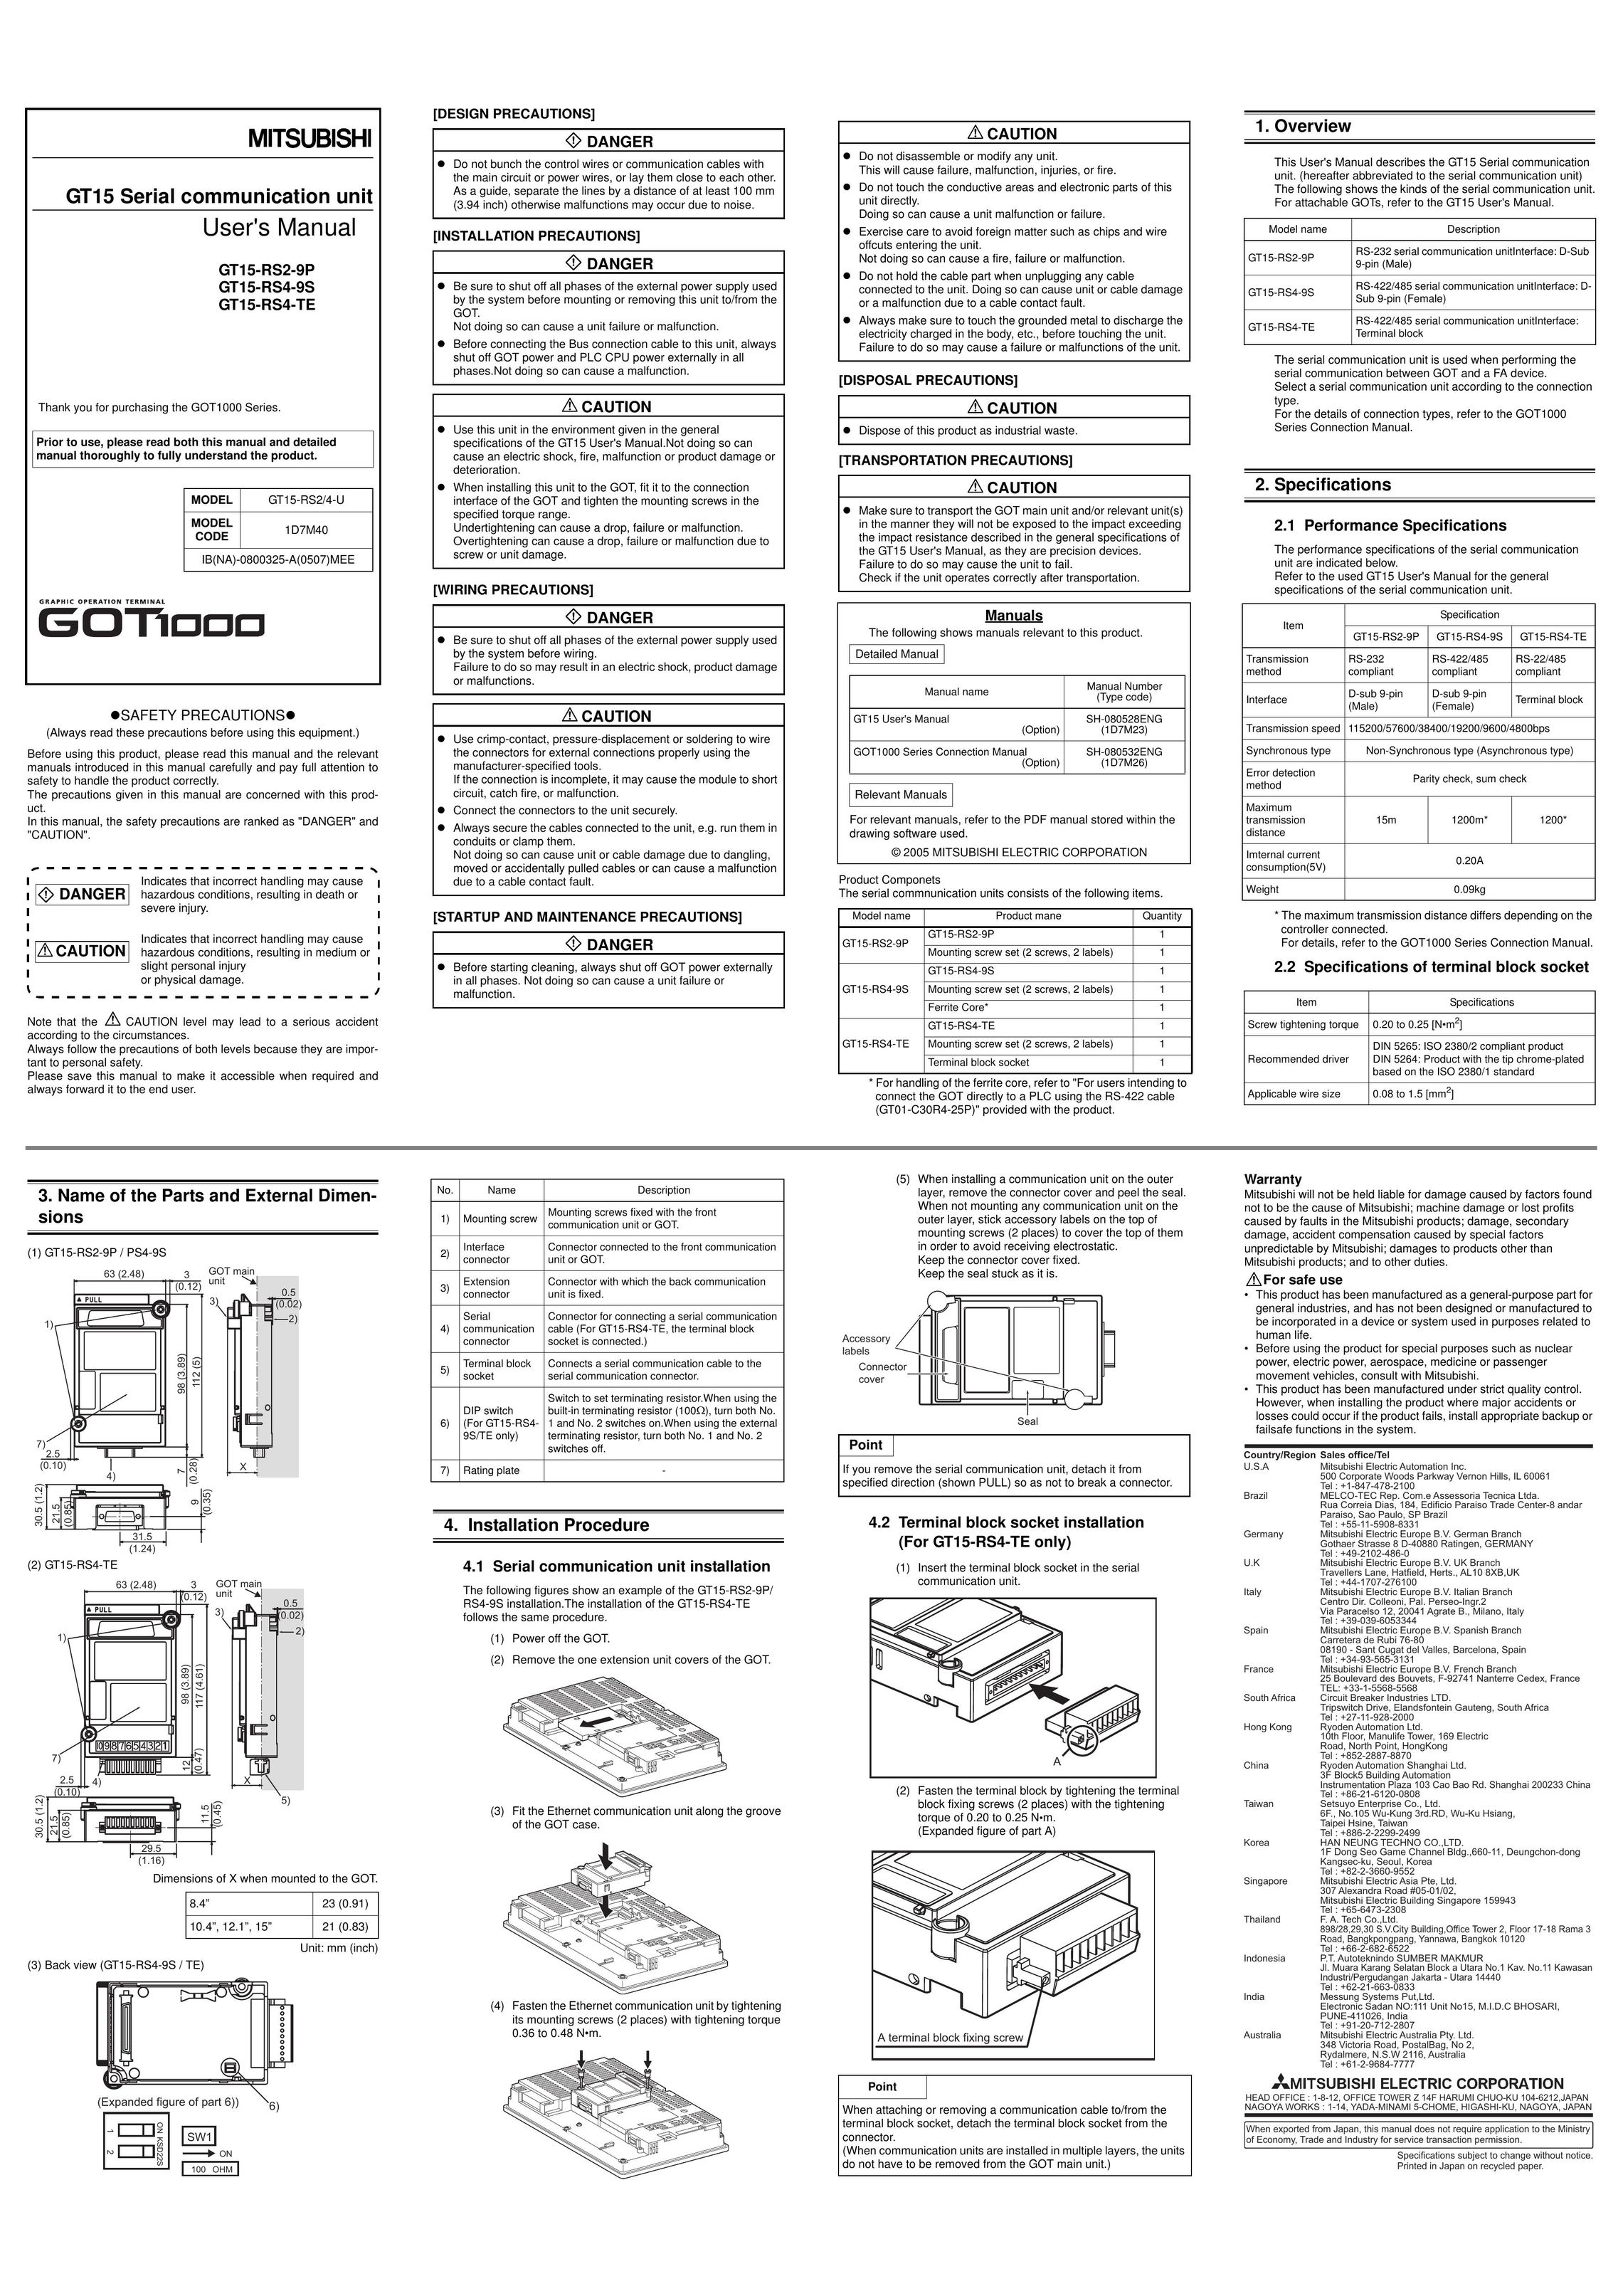 Mitsubishi Electronics Mistubishi GT15 Serial Communication Unit Laser Pointer User Manual